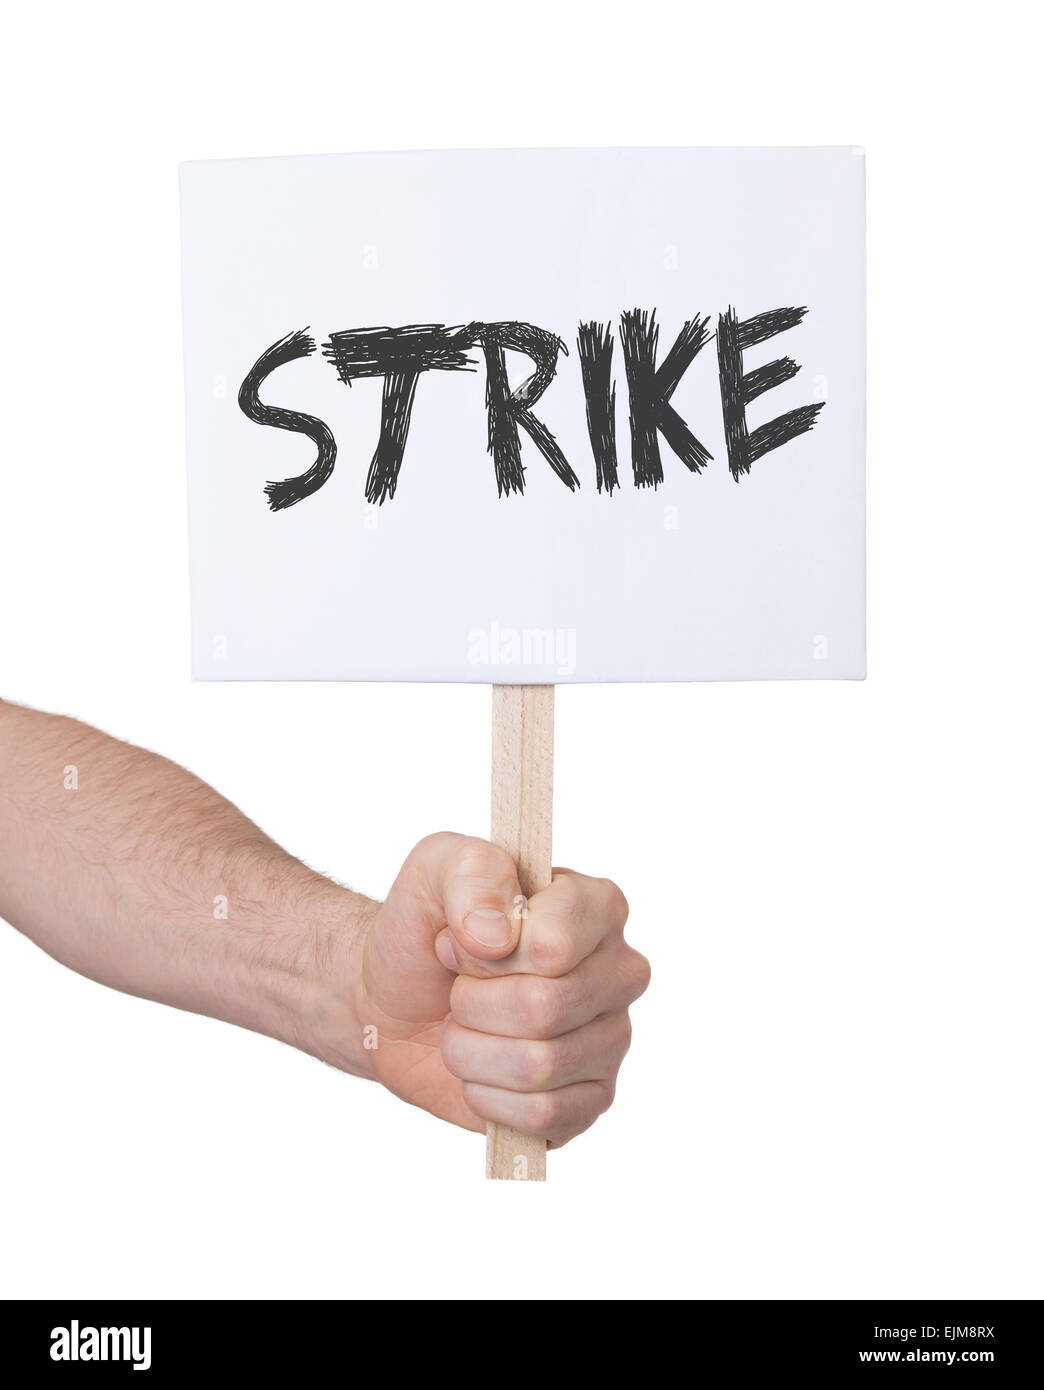 Hand holding sign, isolated on white - Strike Stock Photo